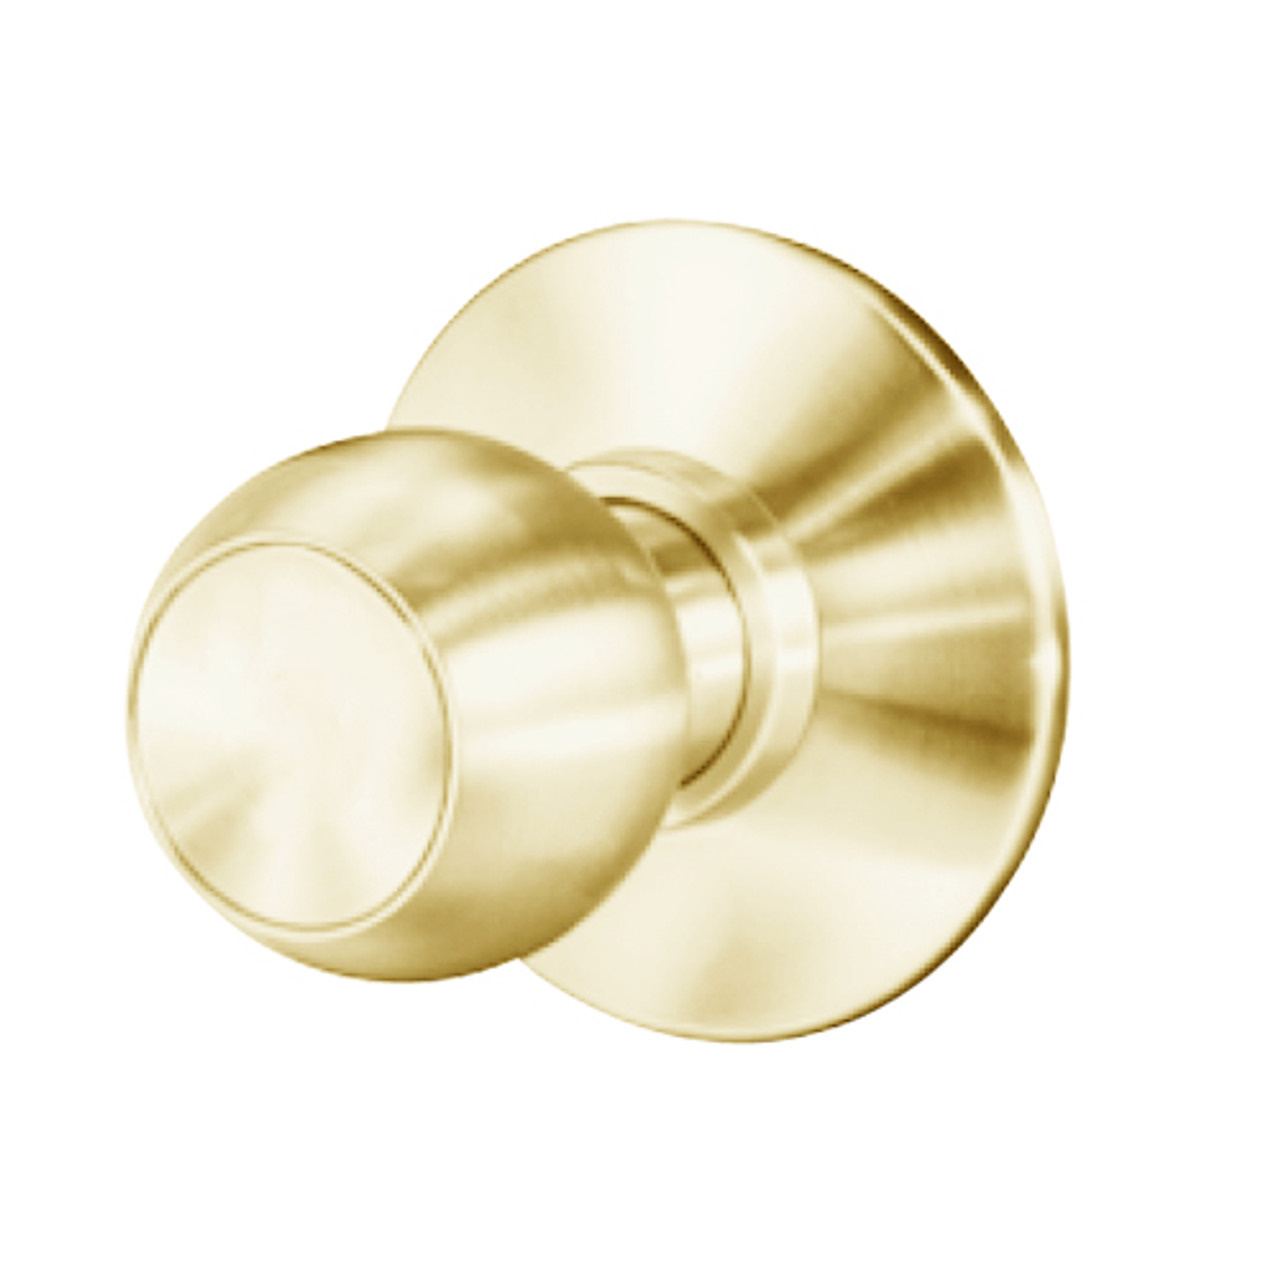 8K30N4DS3605 Best 8K Series Passage Heavy Duty Cylindrical Knob Locks with Round Style in Bright Brass